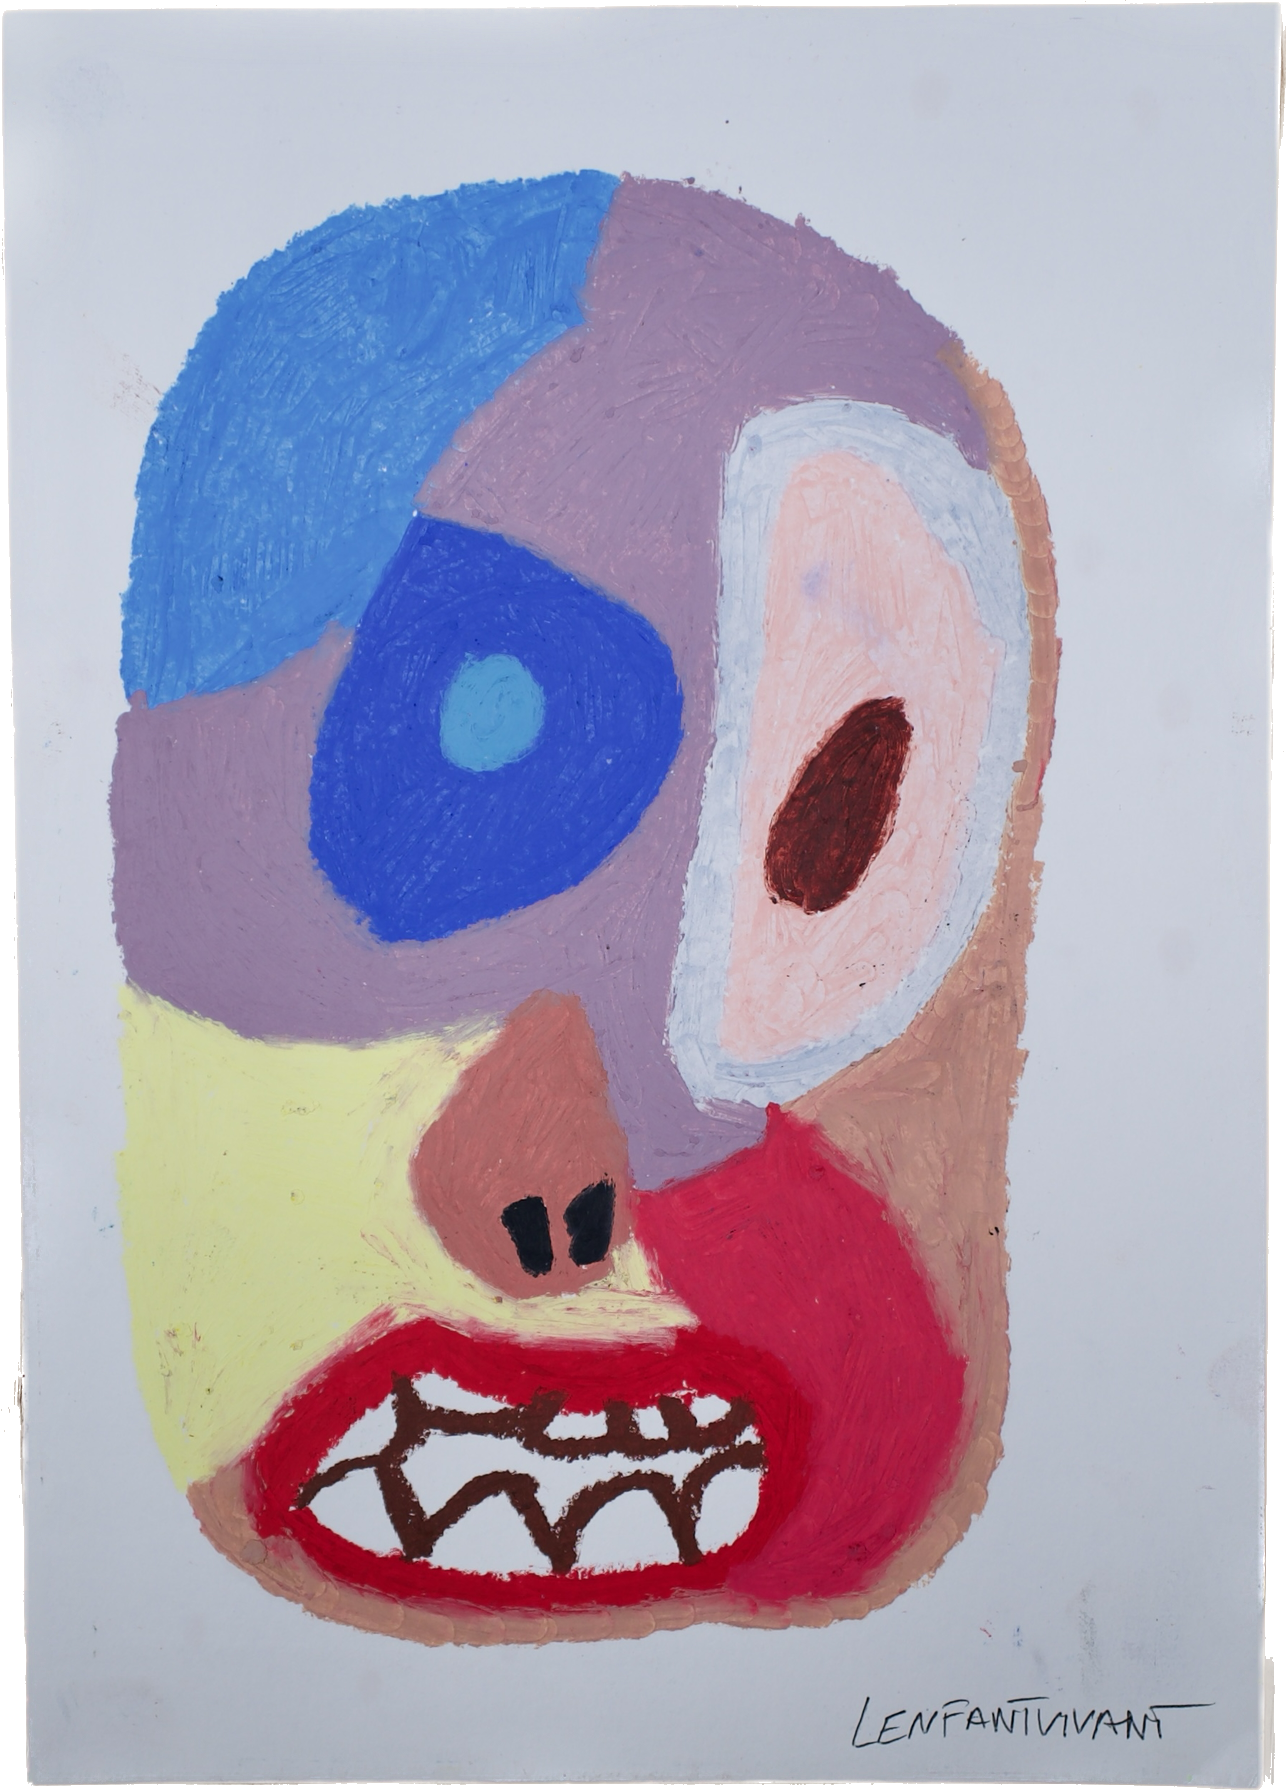 "Lenfantvivant fragmented face artwork" "Sauna Fusion No. 105 contemporary art" "Vibrant abstract art on museum-quality paper" "Expressionist art piece by Lenfantvivant" "Colorful artwork invoking self-reflection"